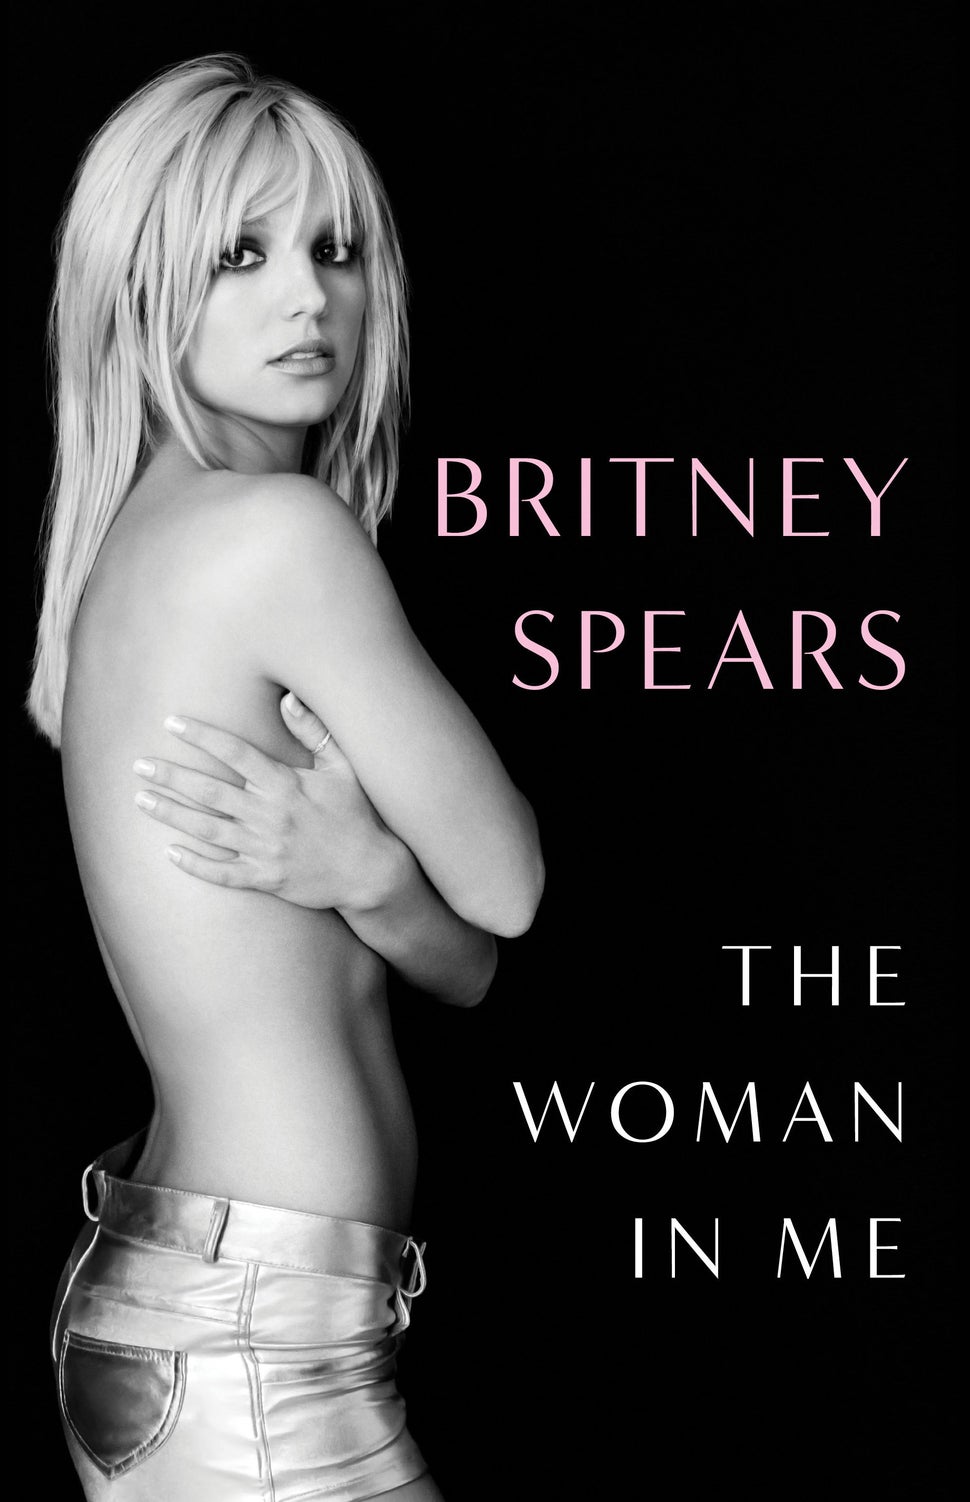 Britney Spears 'The Woman in Me' Memoir Cover